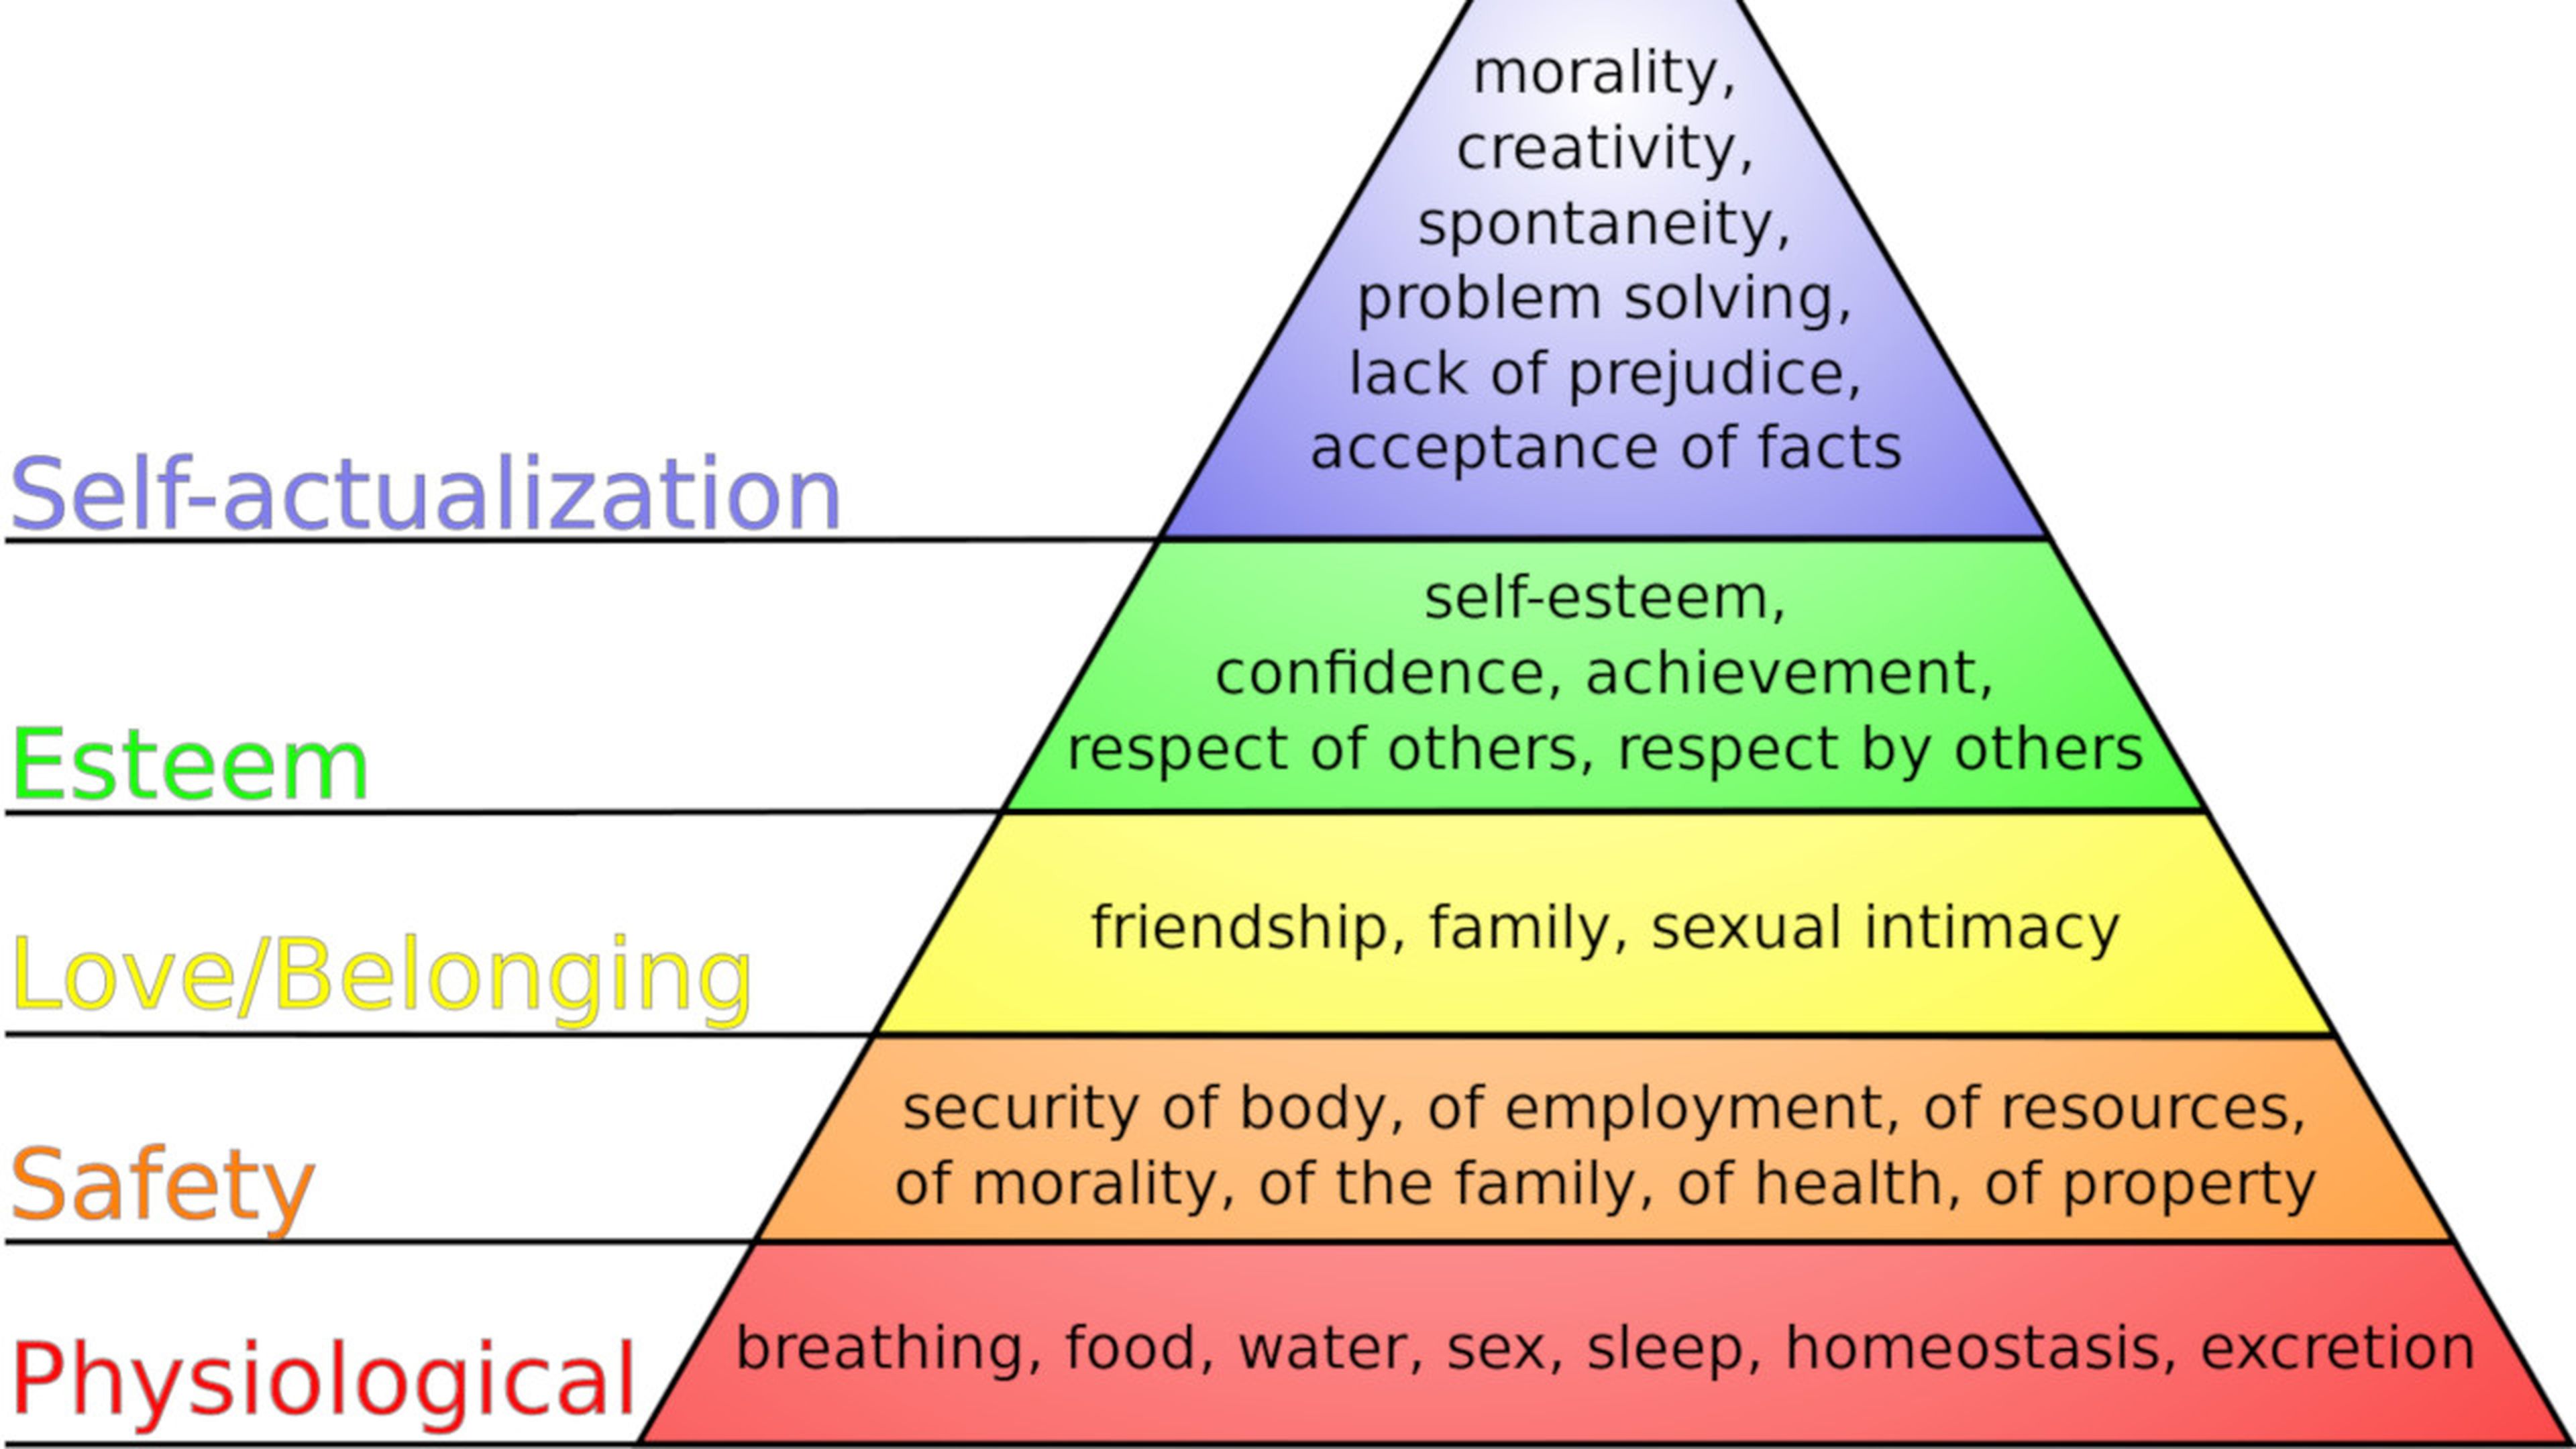 Pirámide de las necesidades humanas de Maslow, por J. Finkelstein (Wikimedia Commons)